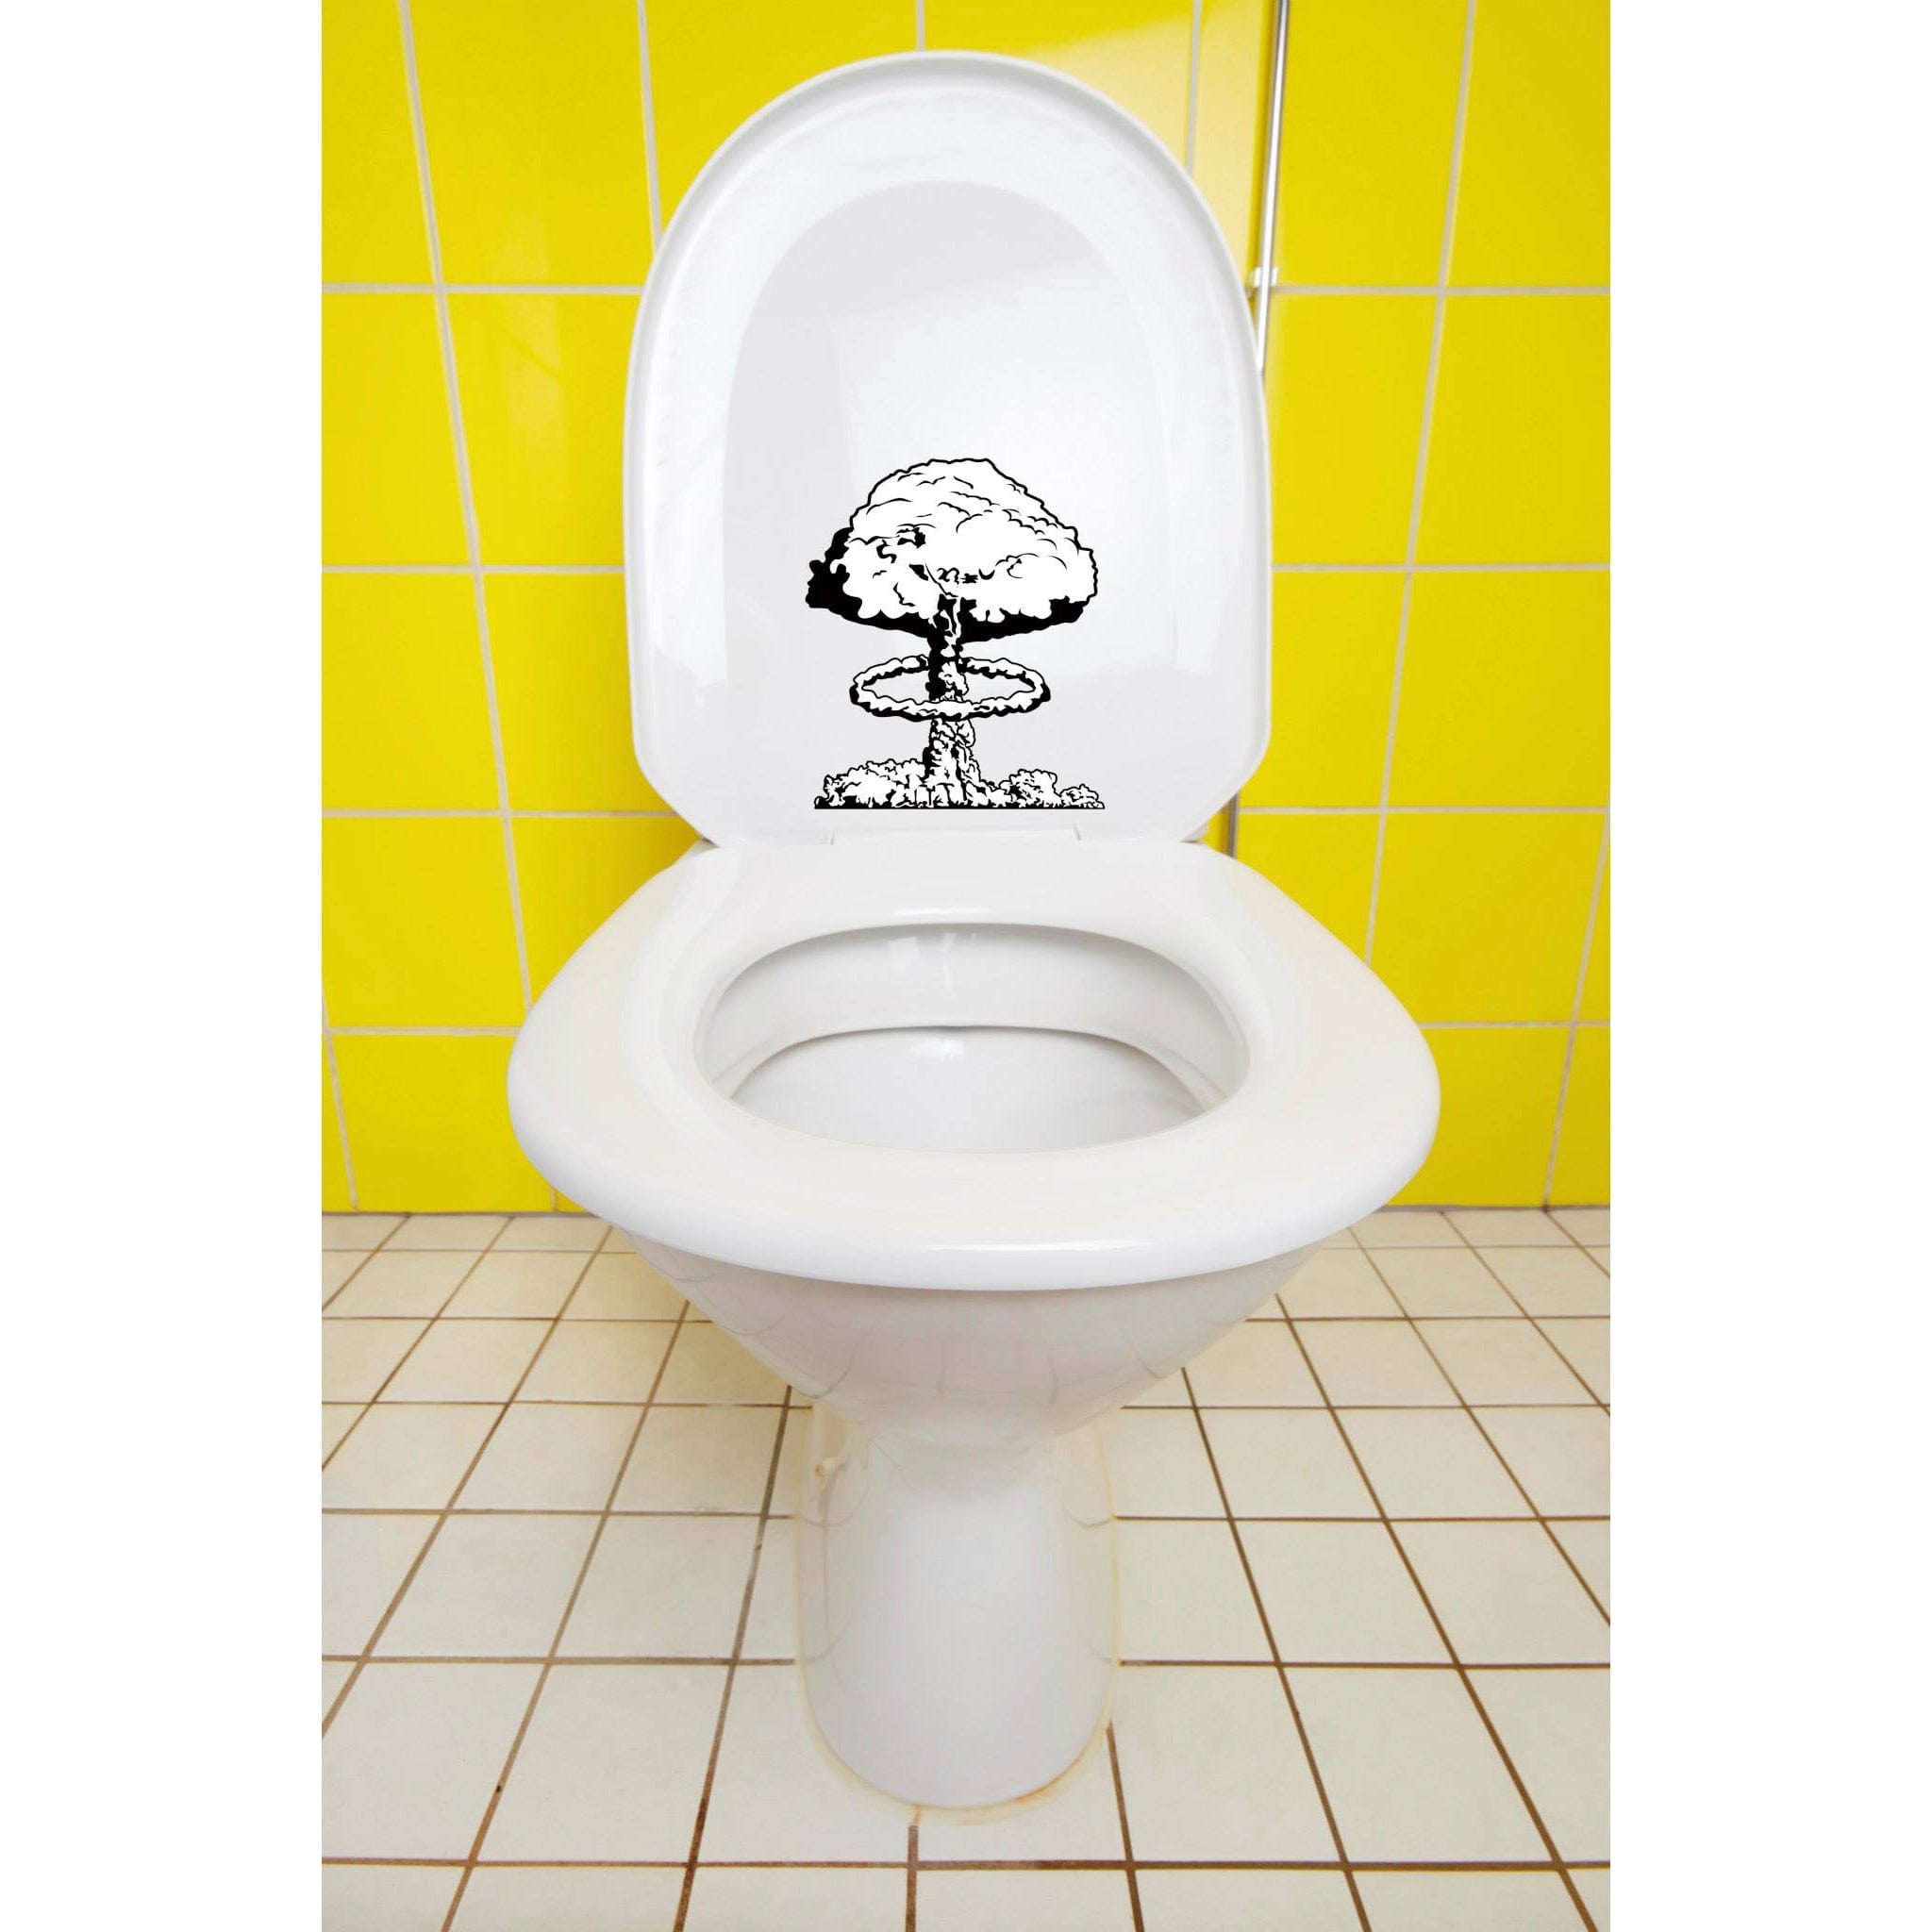 The Bathroom Bomber Novelty Toilet Bowl Sticker Set LIQUIDATION PRICING